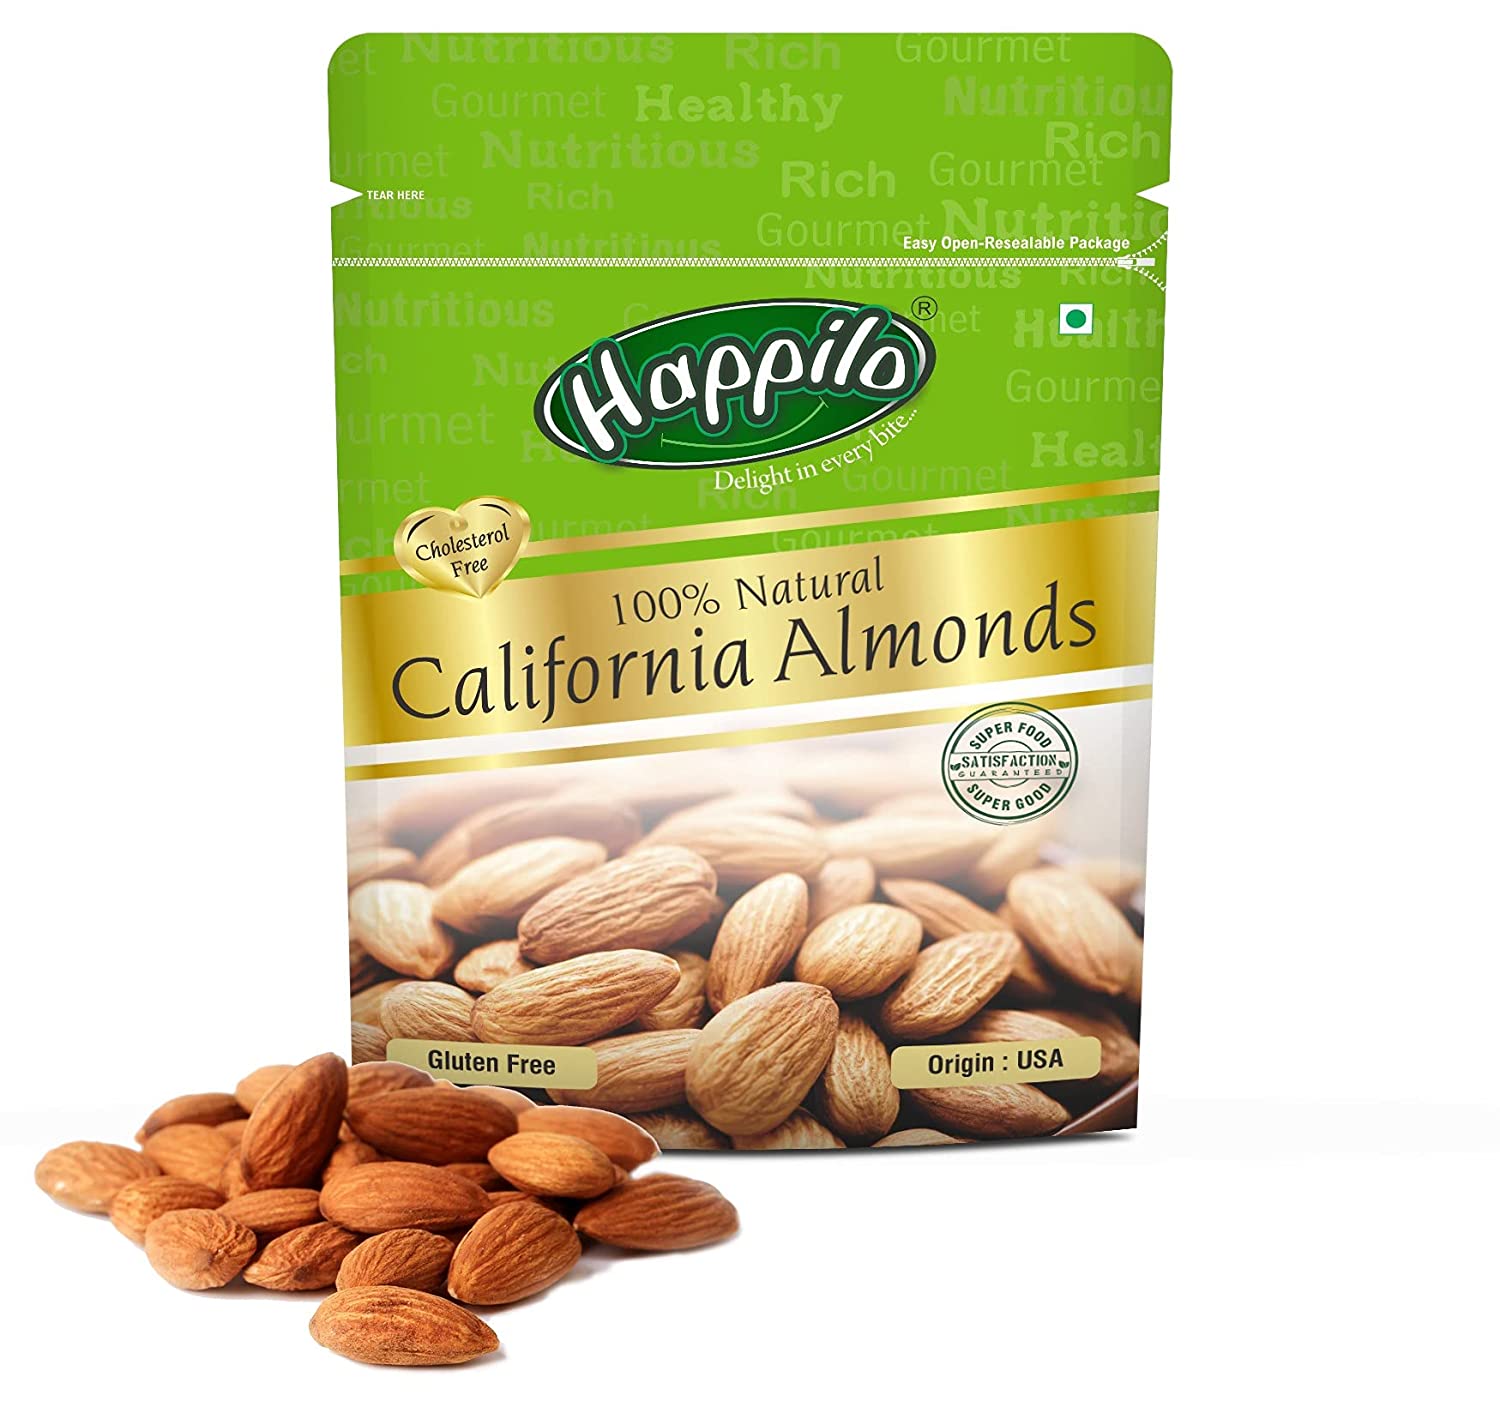 Happilo 100% Natural Premium Californian Almonds